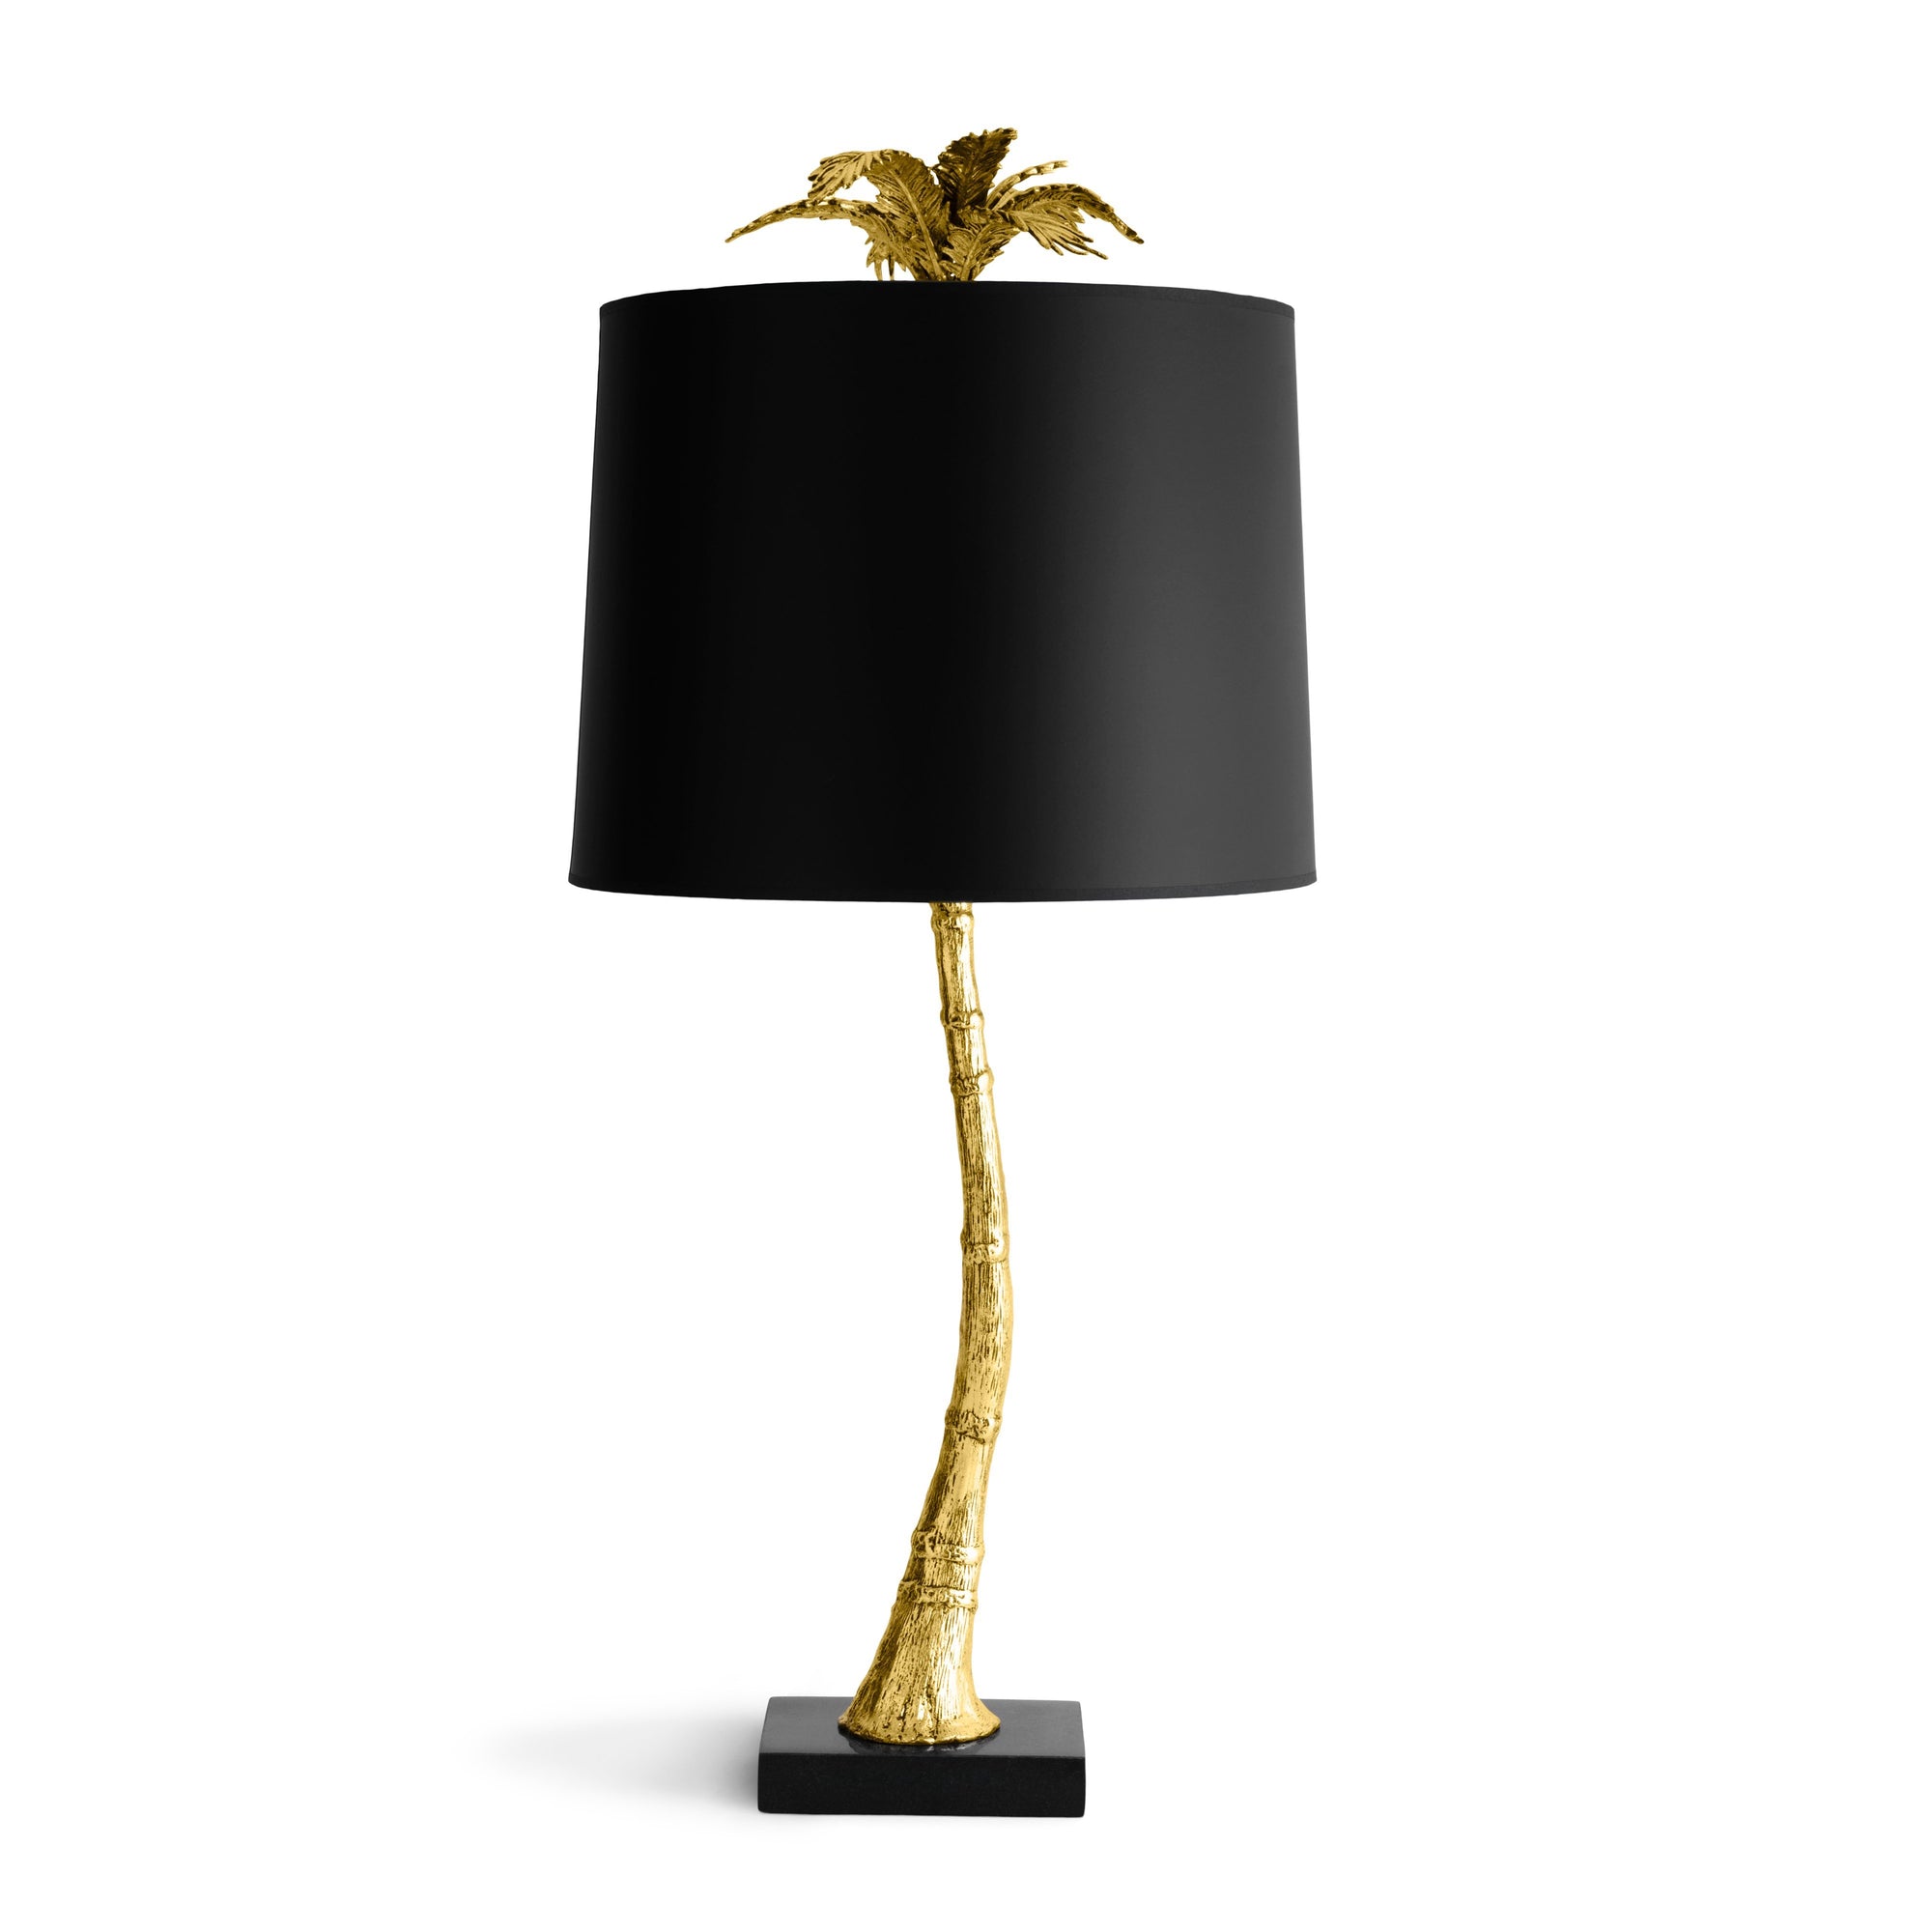 Michael Aram Palm Table Lamp